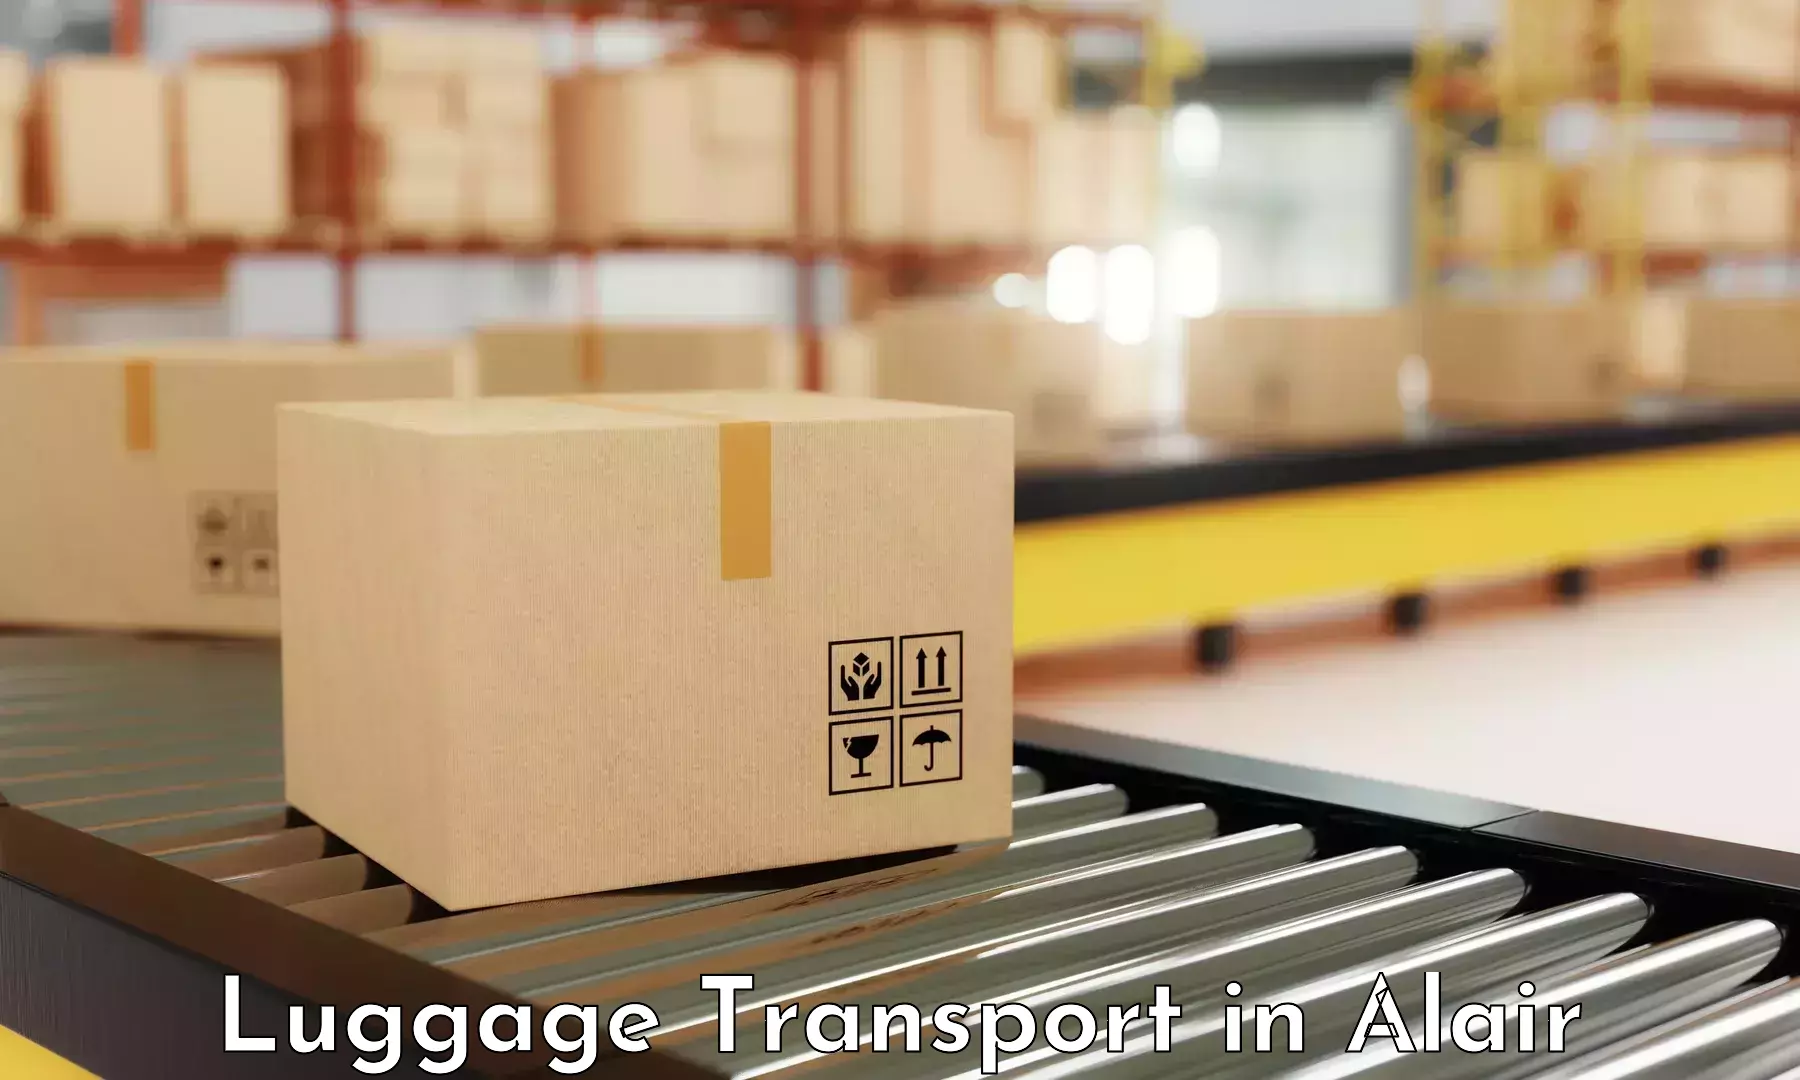 Luggage transit service in Alair